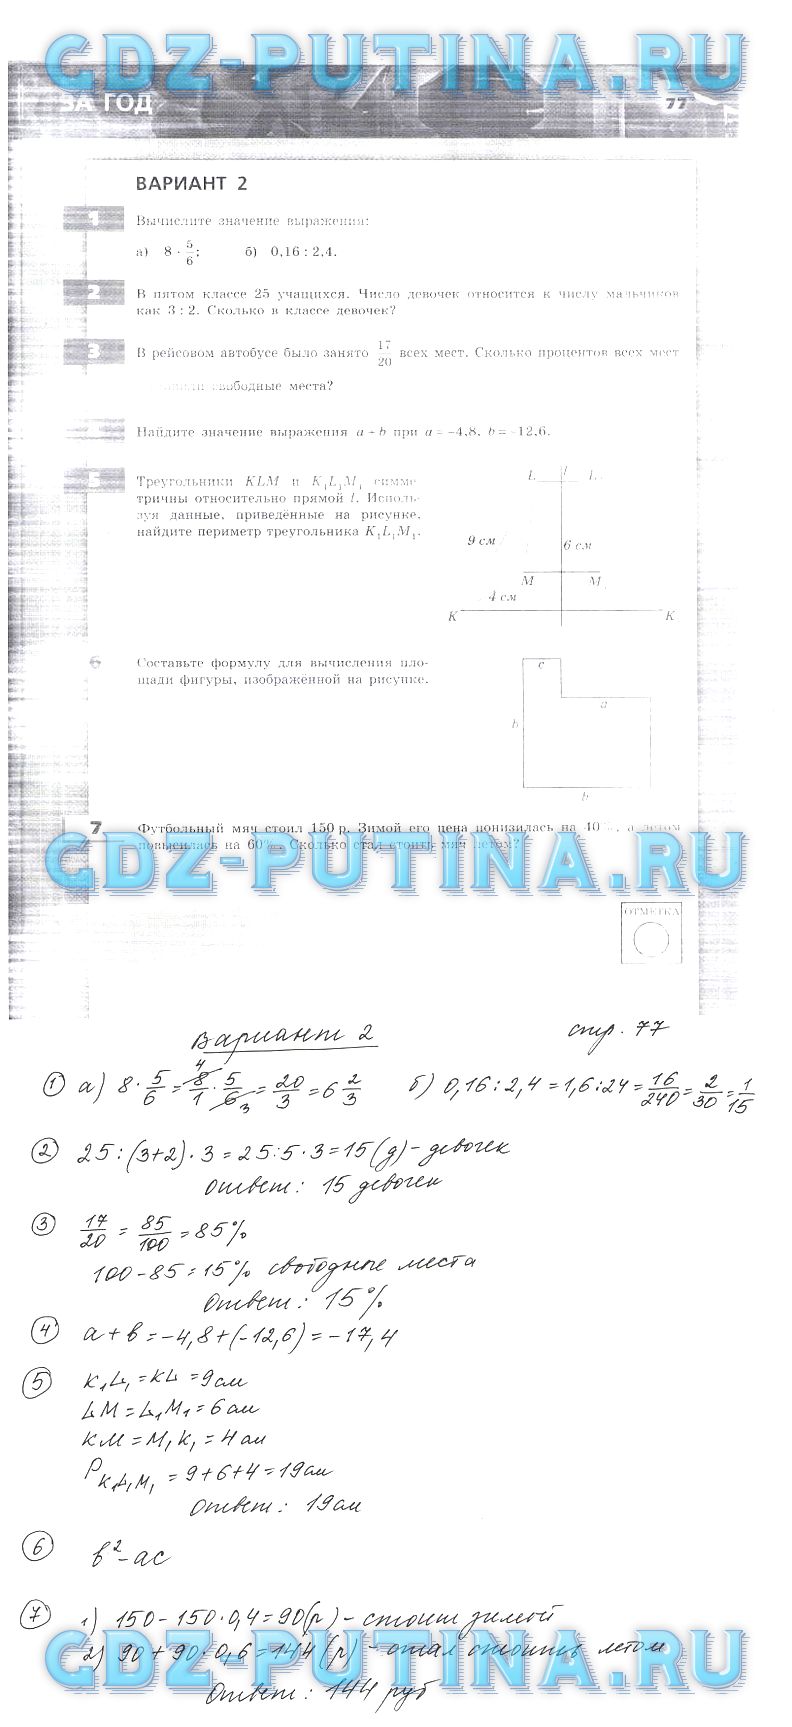 гдз 6 класс тетрадь-экзаменатор страница 77 математика Кузнецова